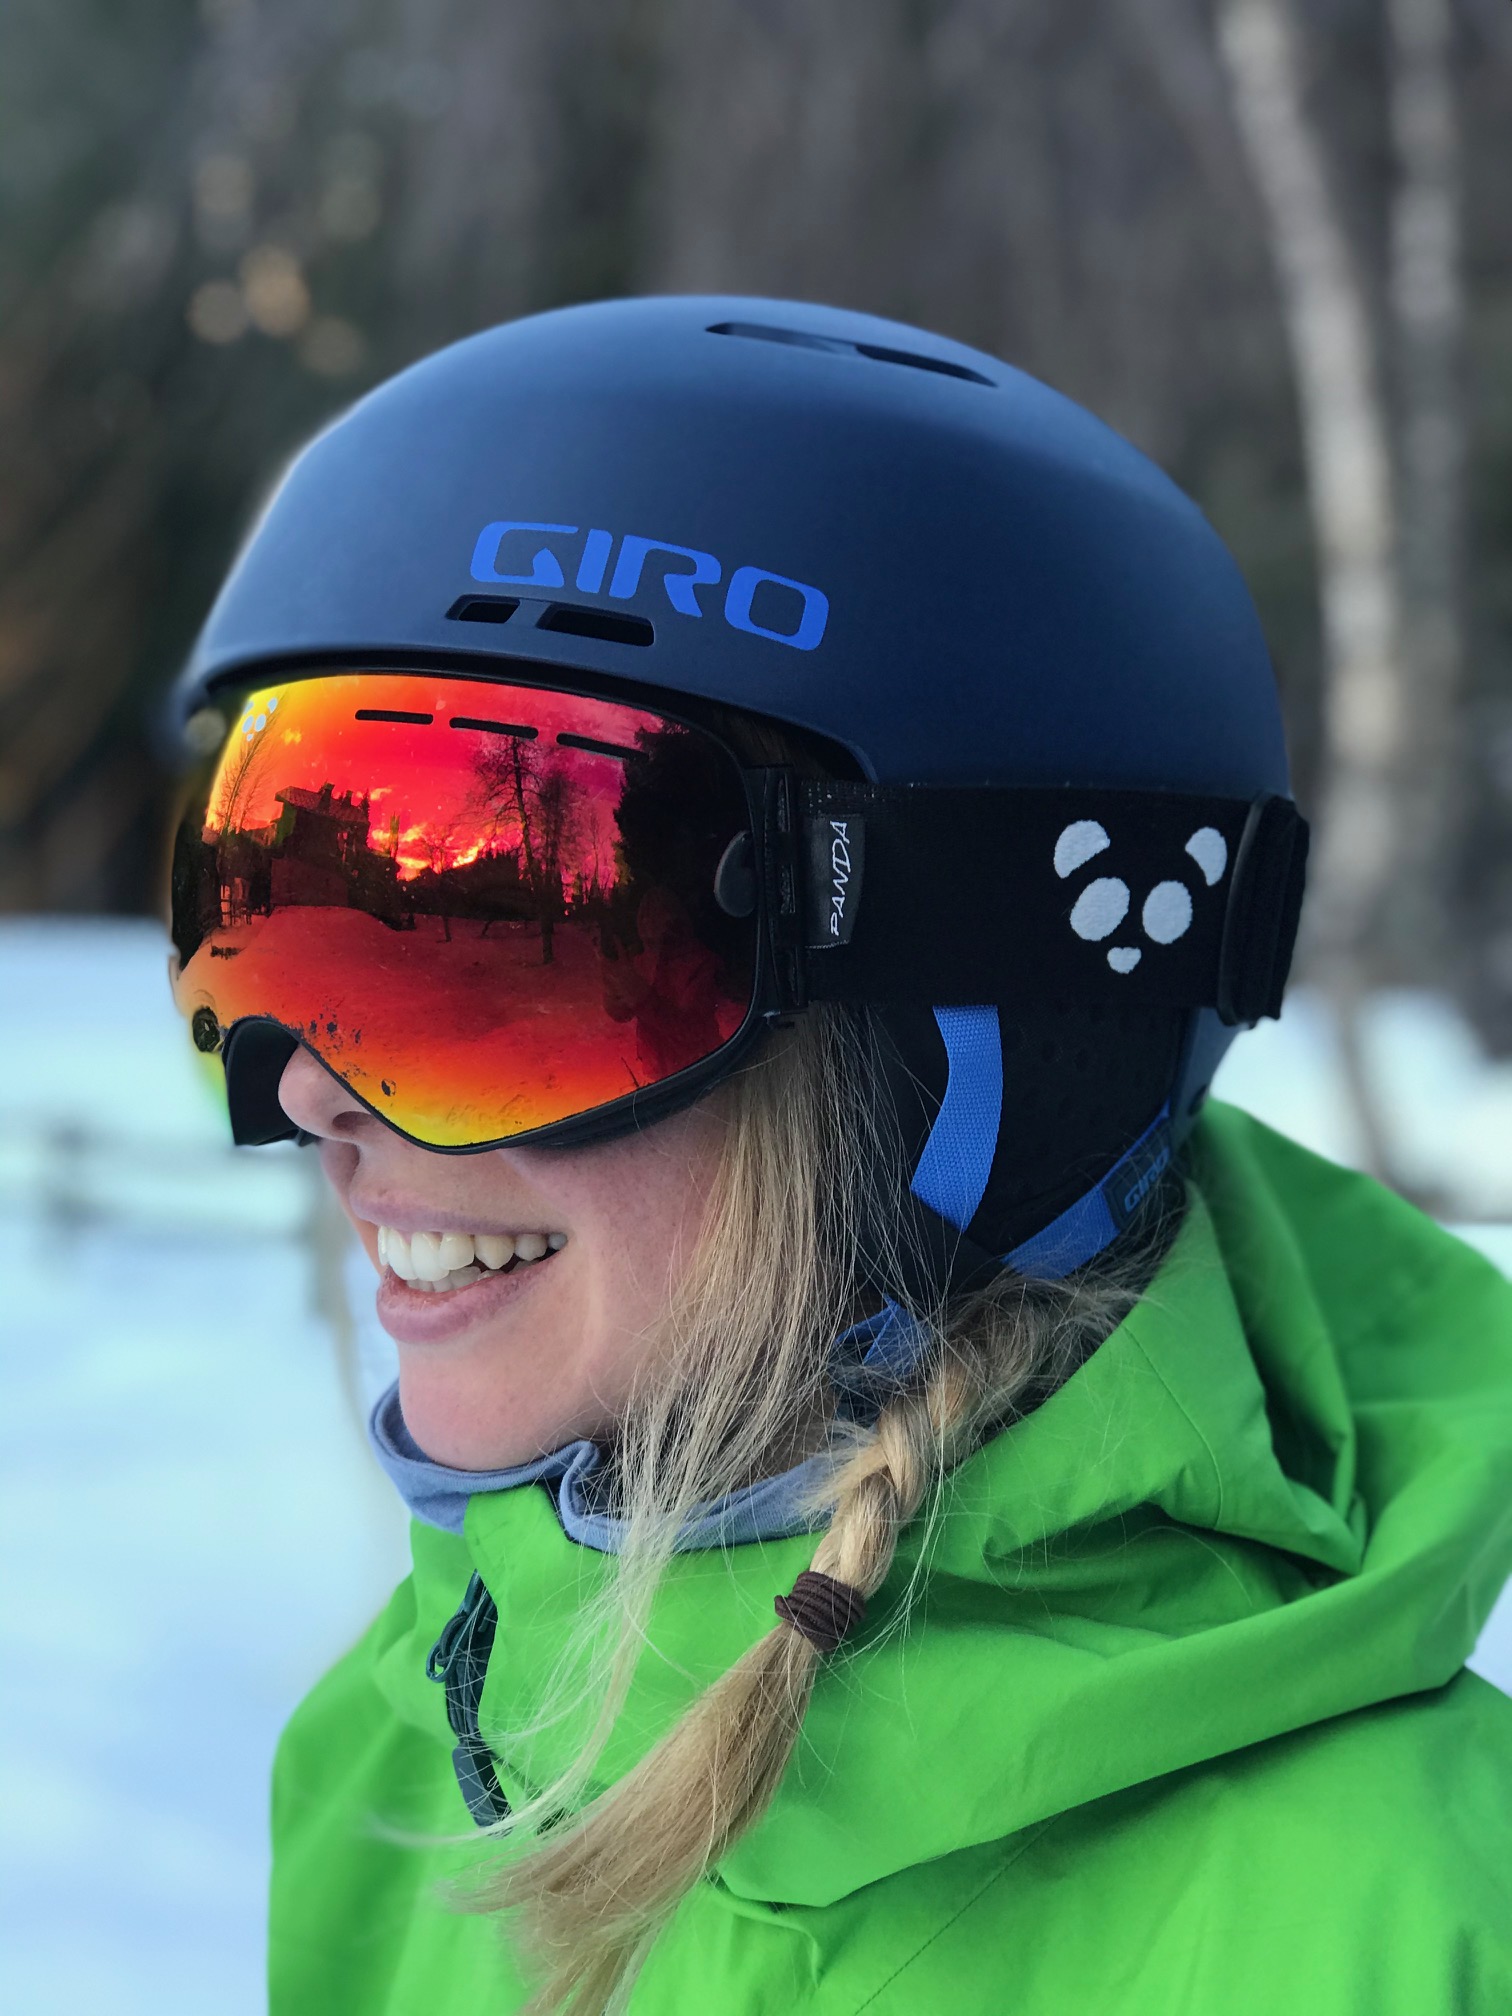 Giro Unisex  M Adults EMERGE Mips Ski Helmet saphite mat